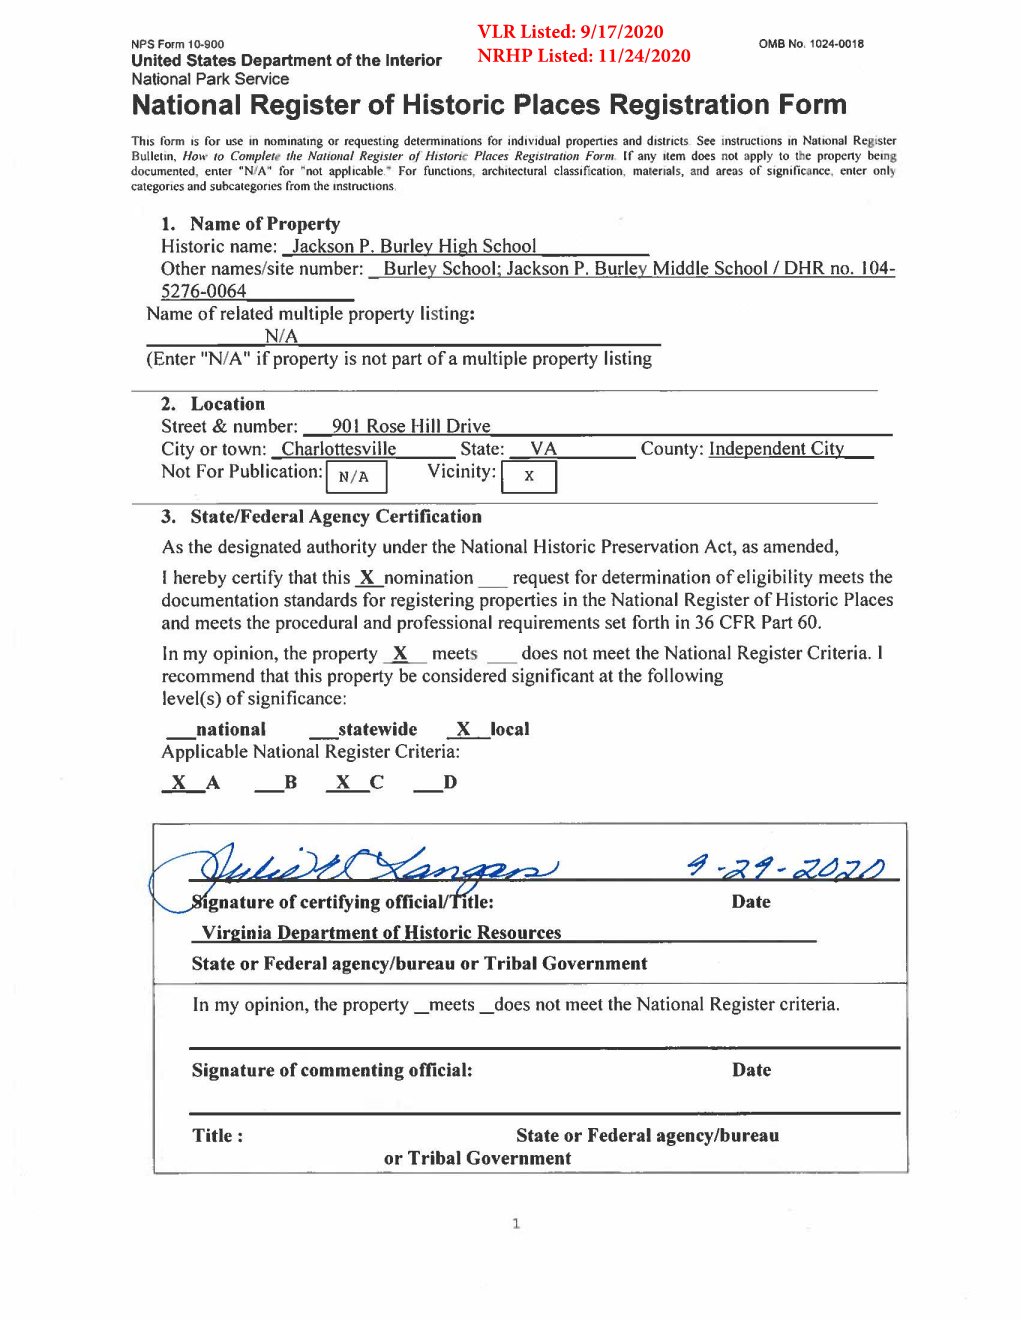 Nomination Form, 2005